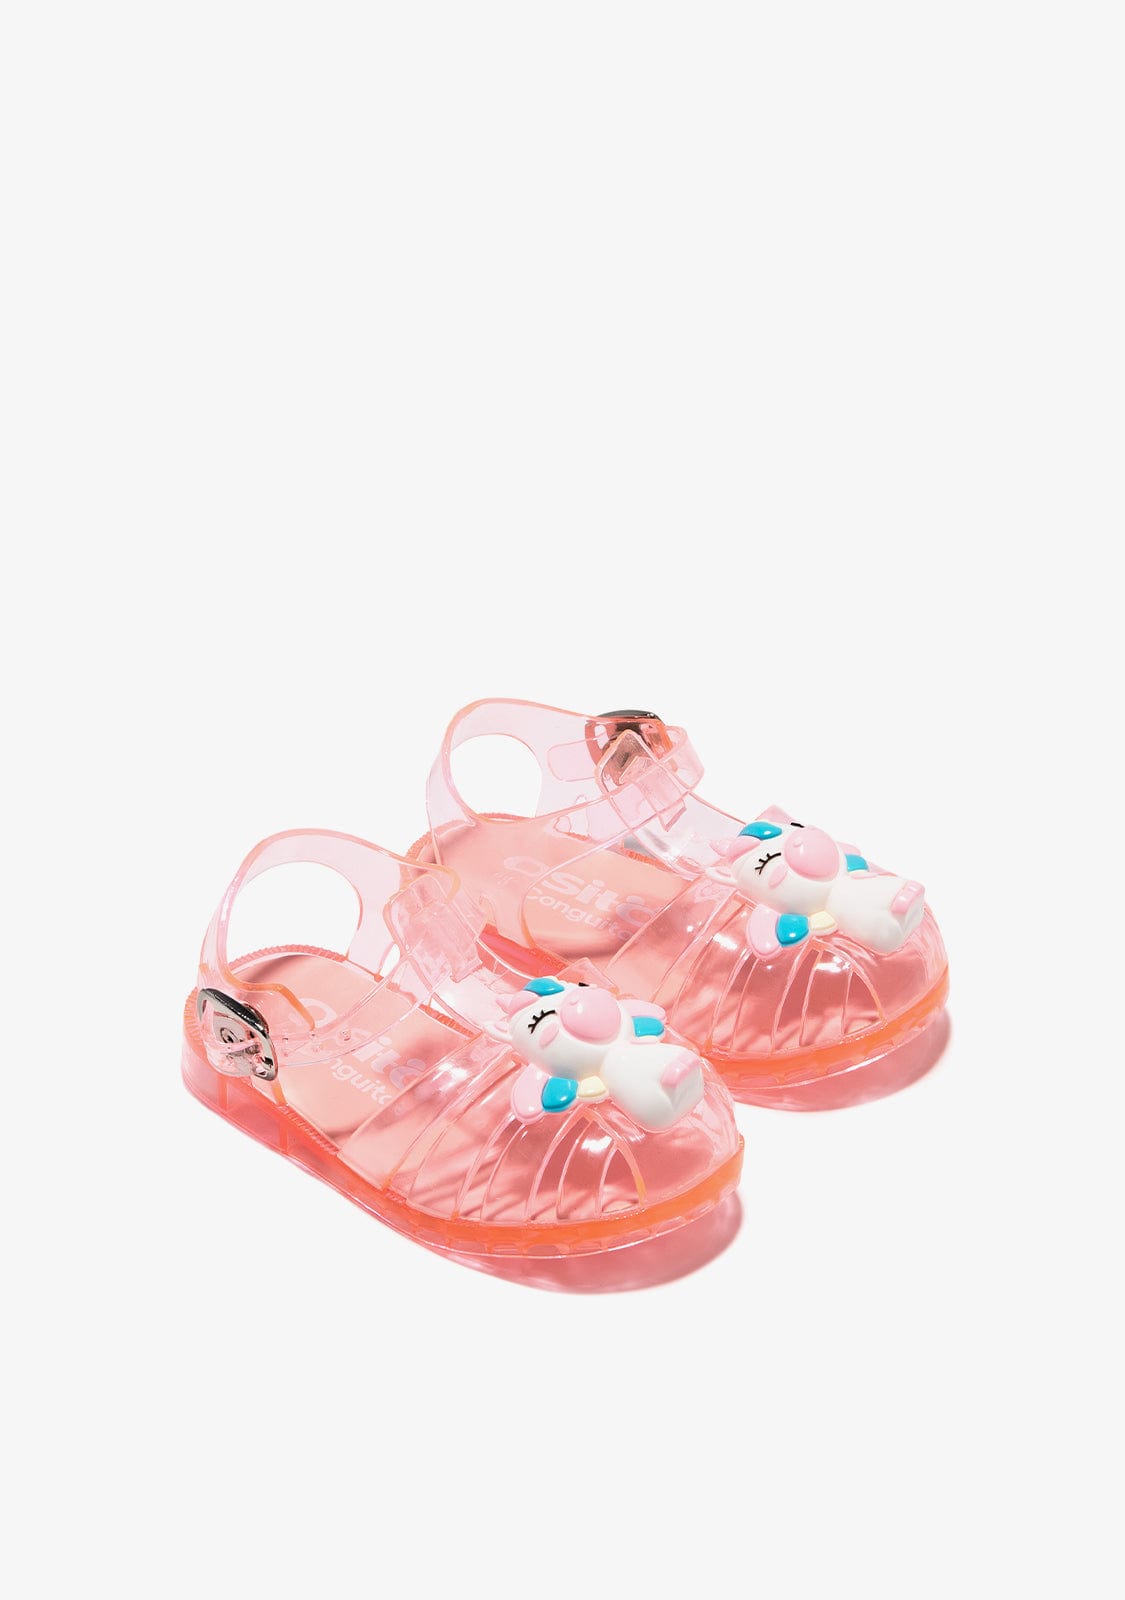 OSITO HEBILLAS Pink Buckle Jelly Sandals